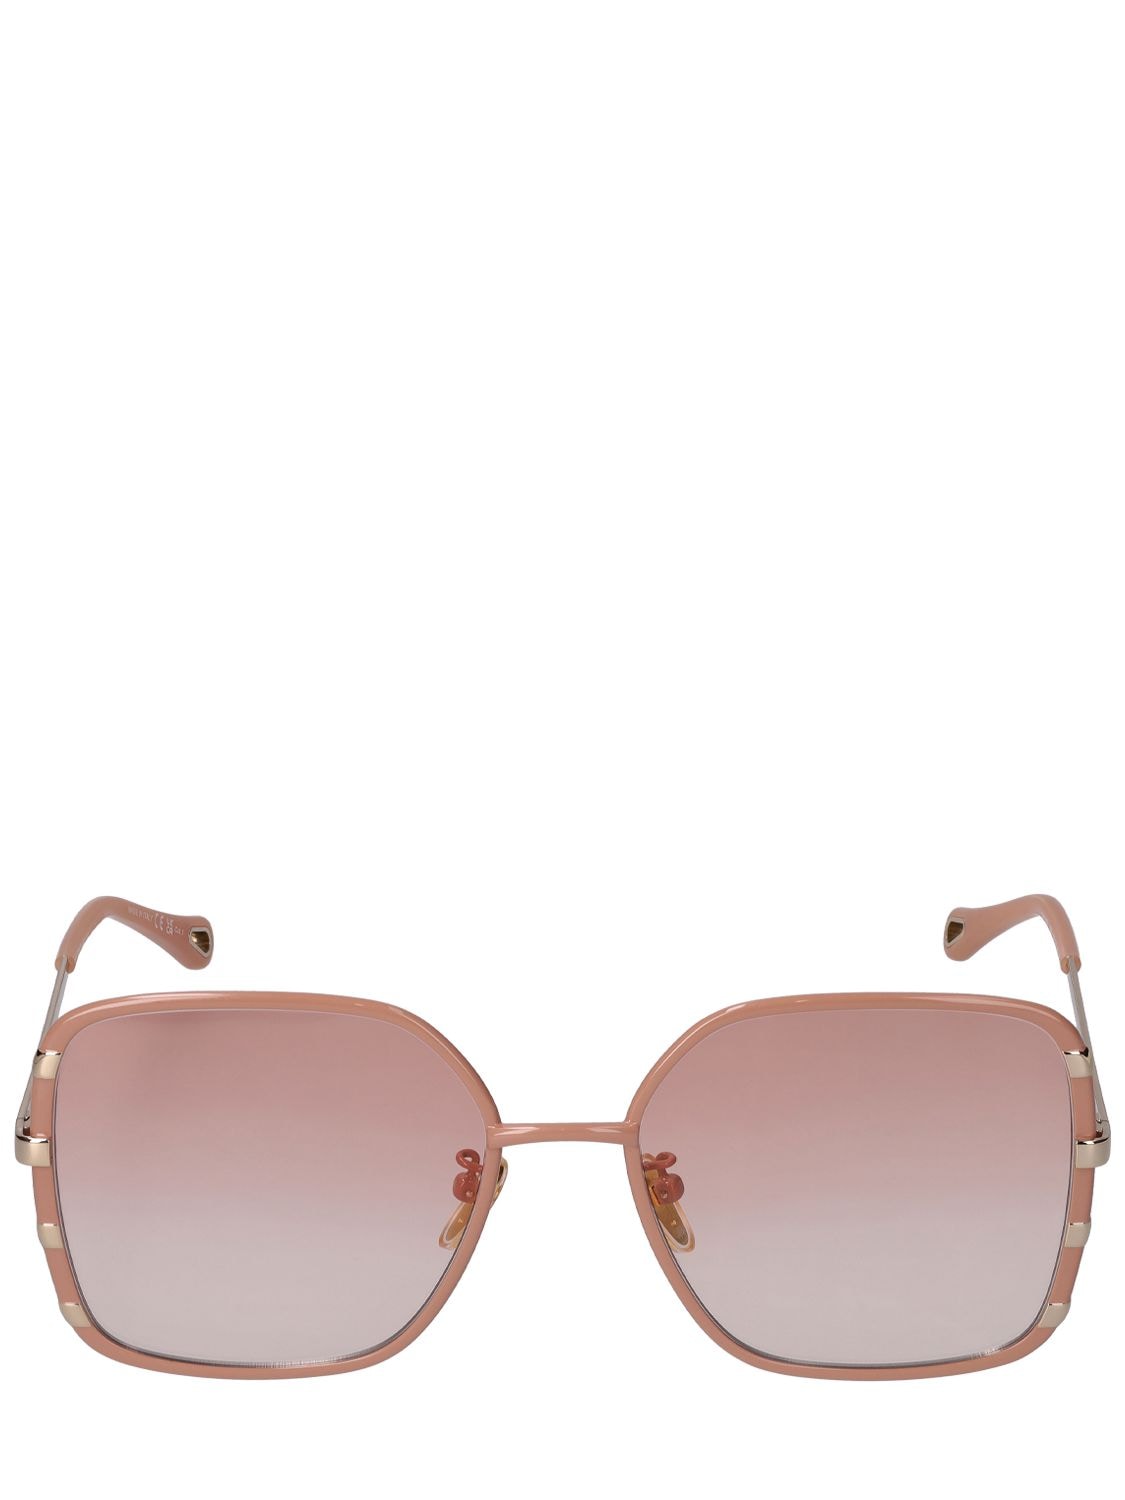 Image of Celeste Squared Metal Sunglasses